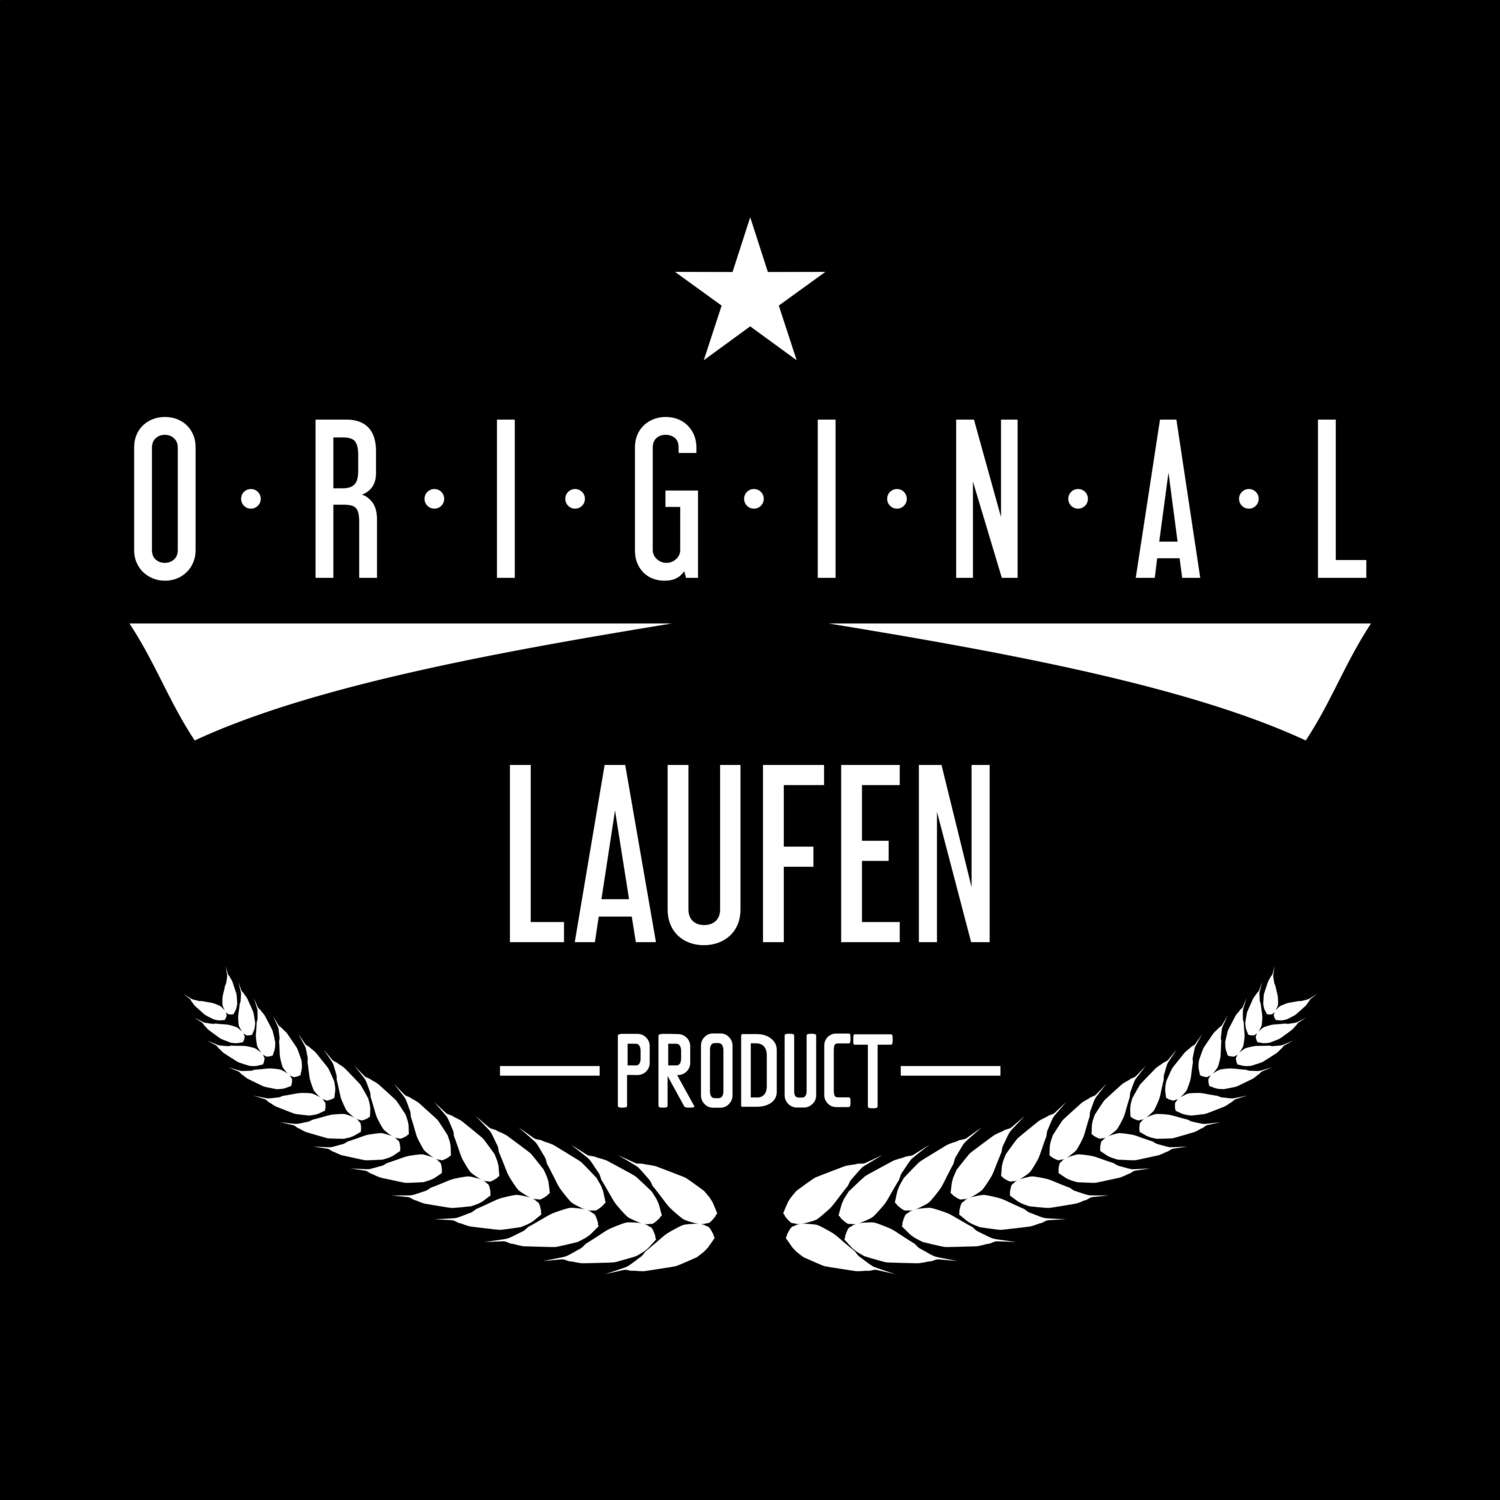 Laufen T-Shirt »Original Product«